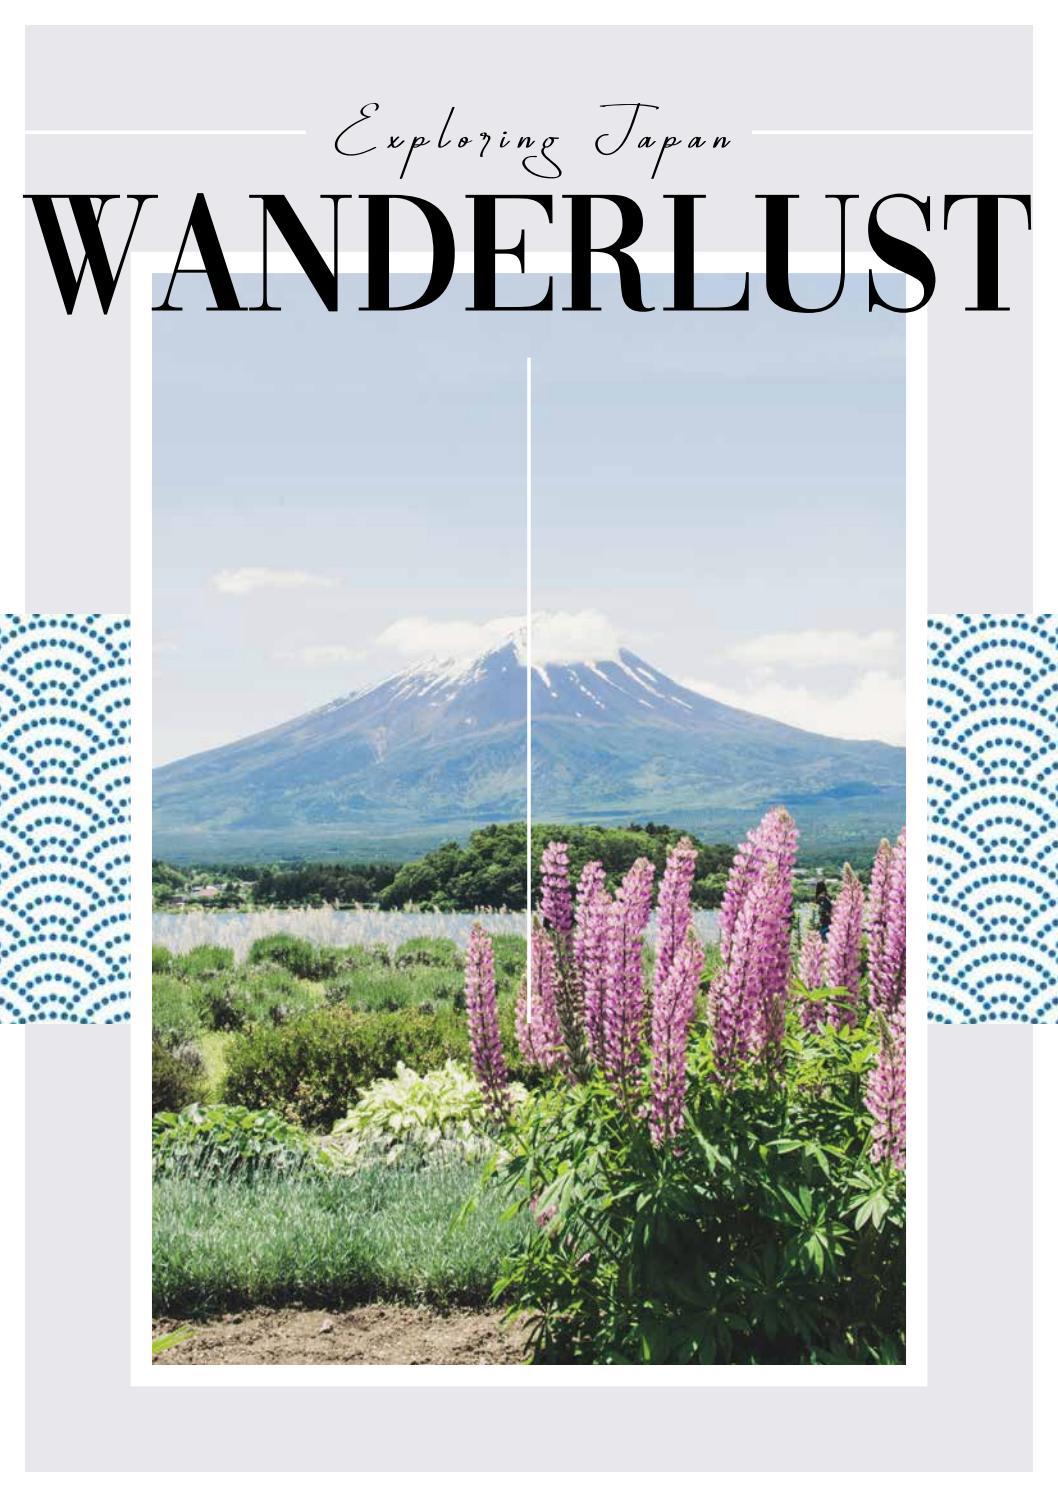 Wanderlust Magazine - Exploring Japan